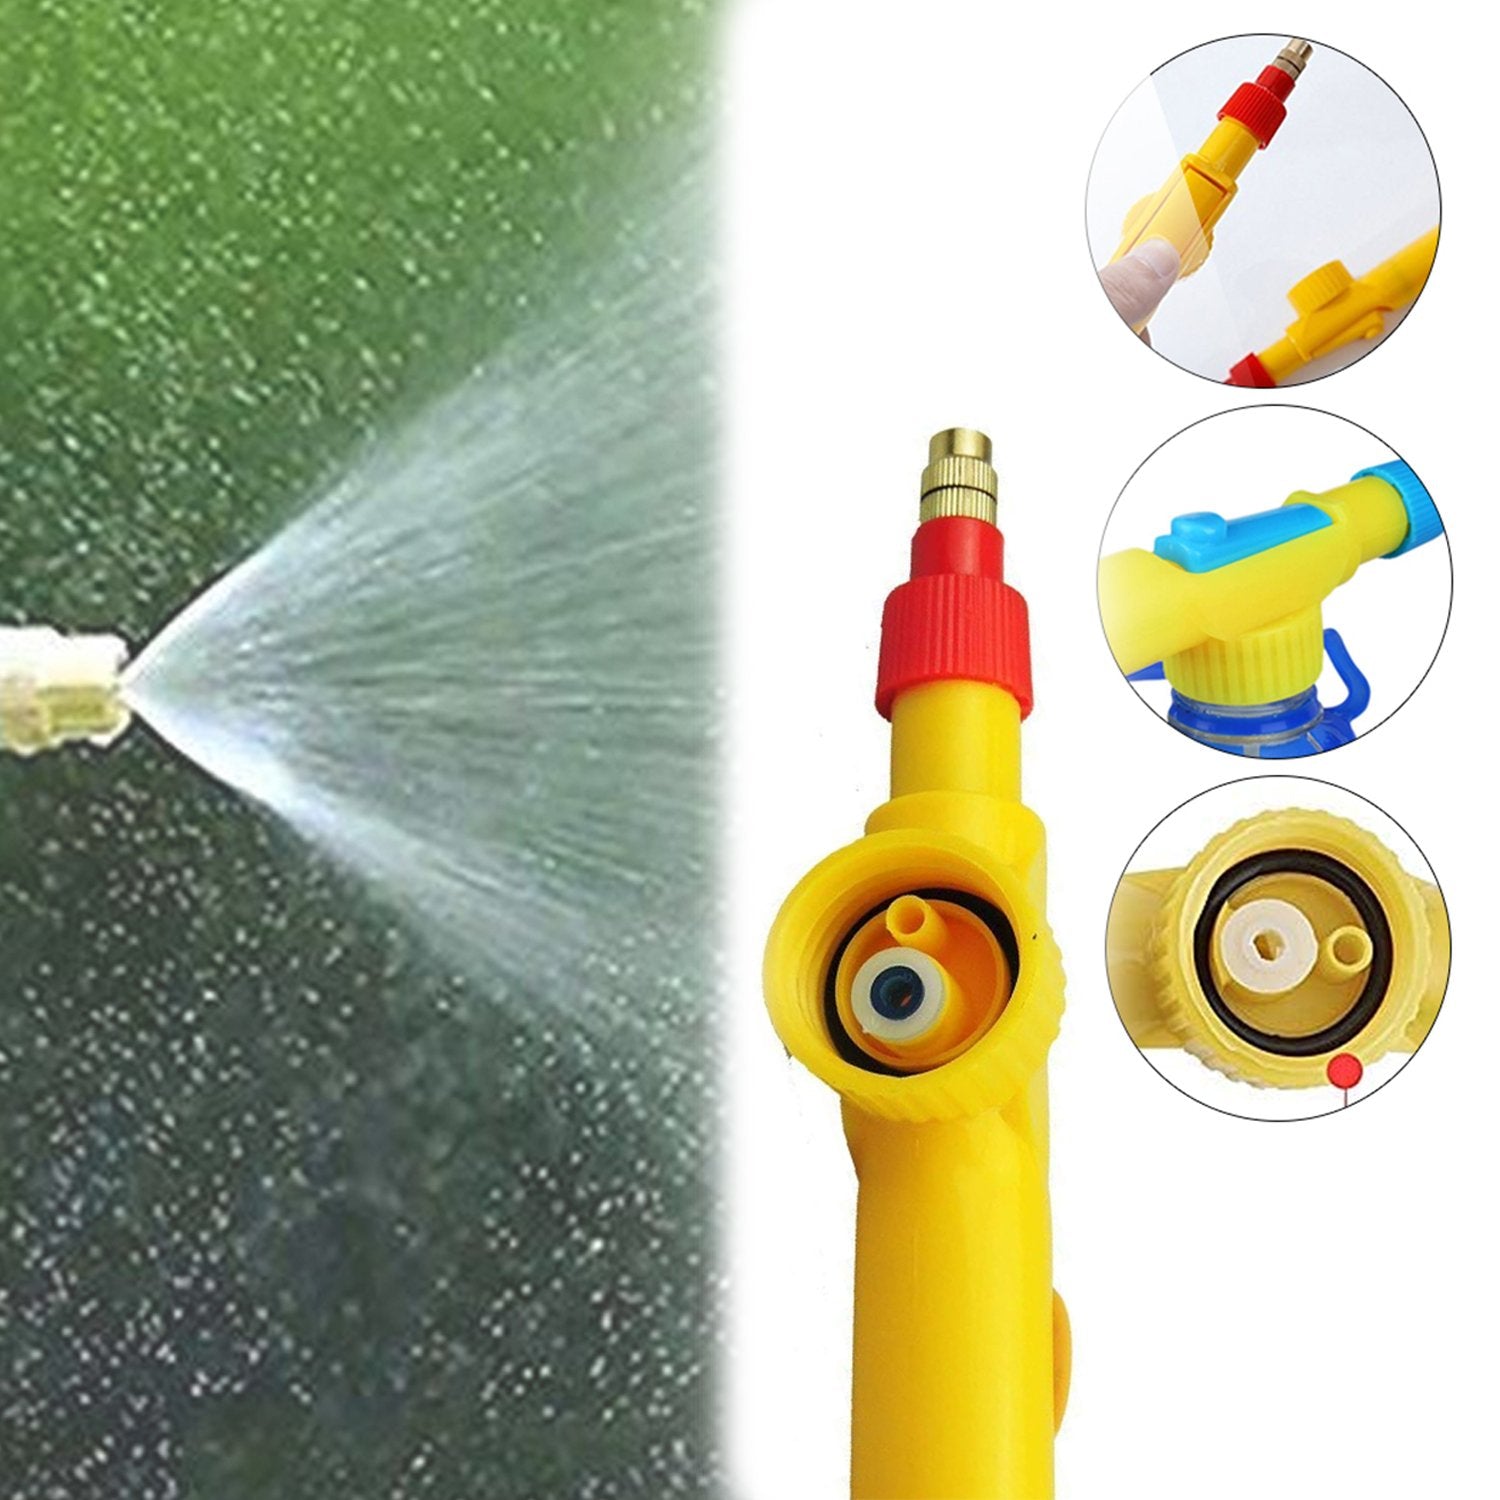 0468 Bottle Sprayer for Plants Garden Pesticide Car Wash with Adjustable Brass Nozzle Sprayer (Handheld Pump) - SkyShopy